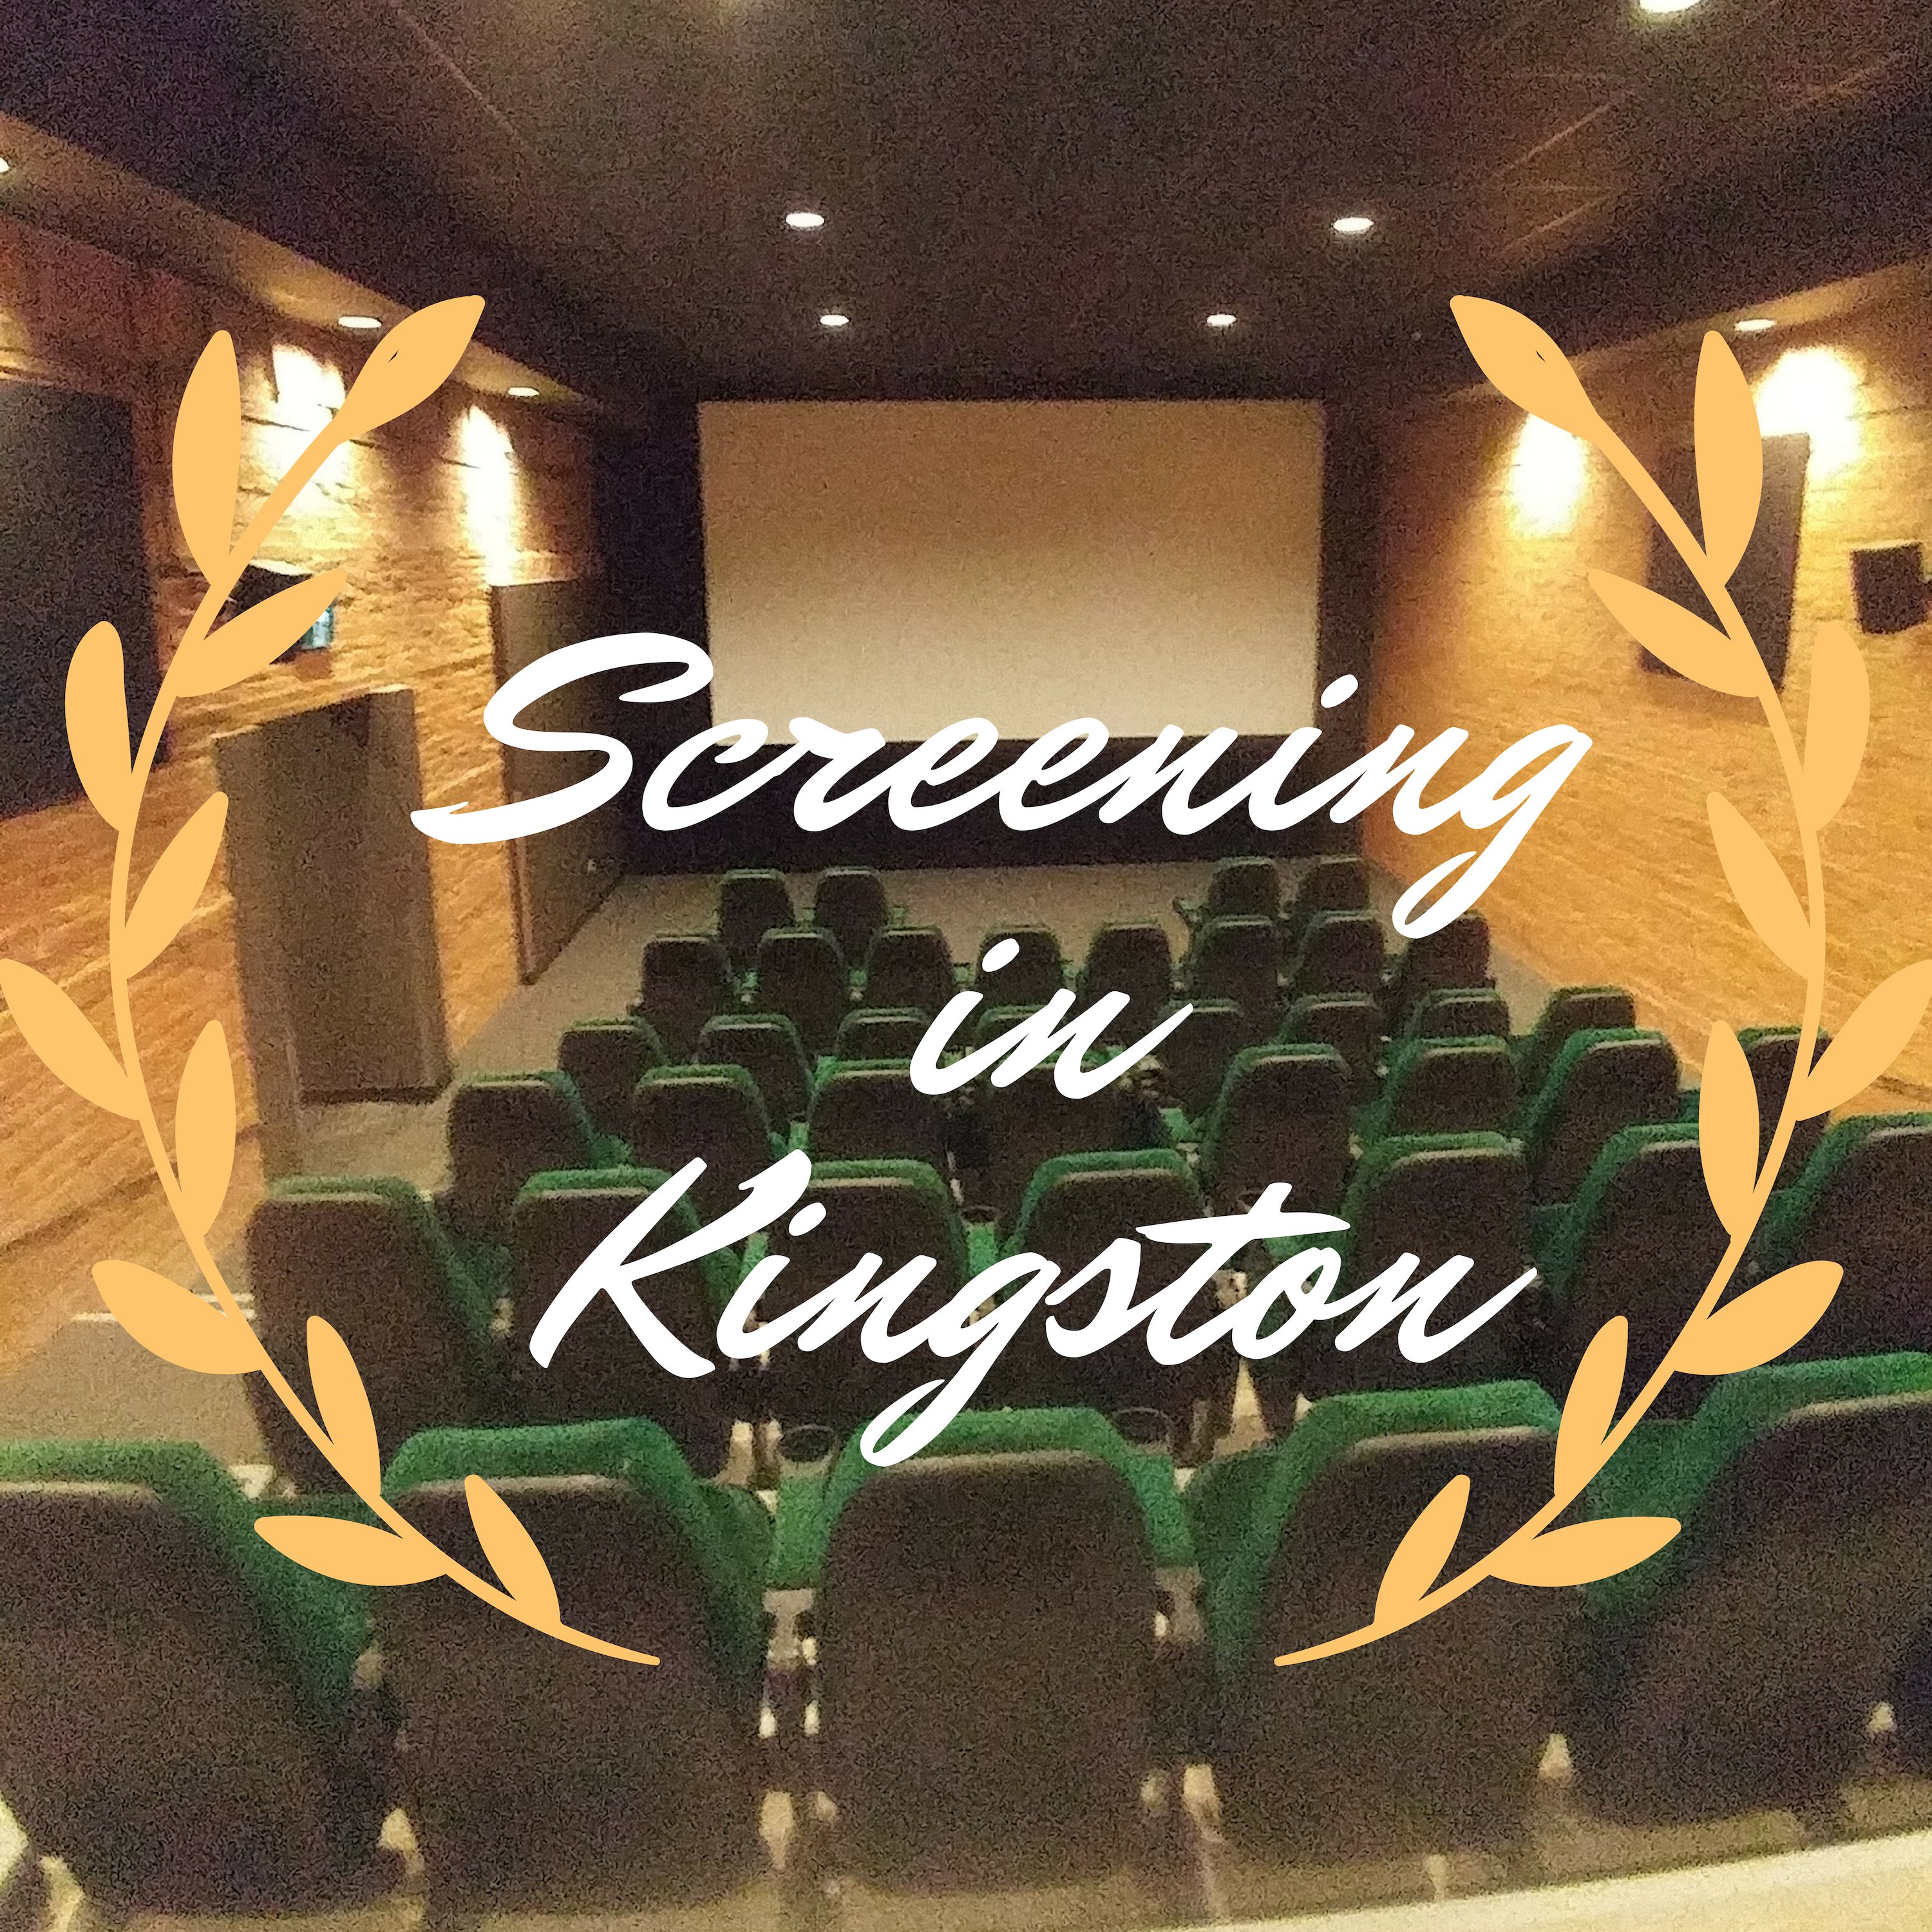 Screening in Kingston